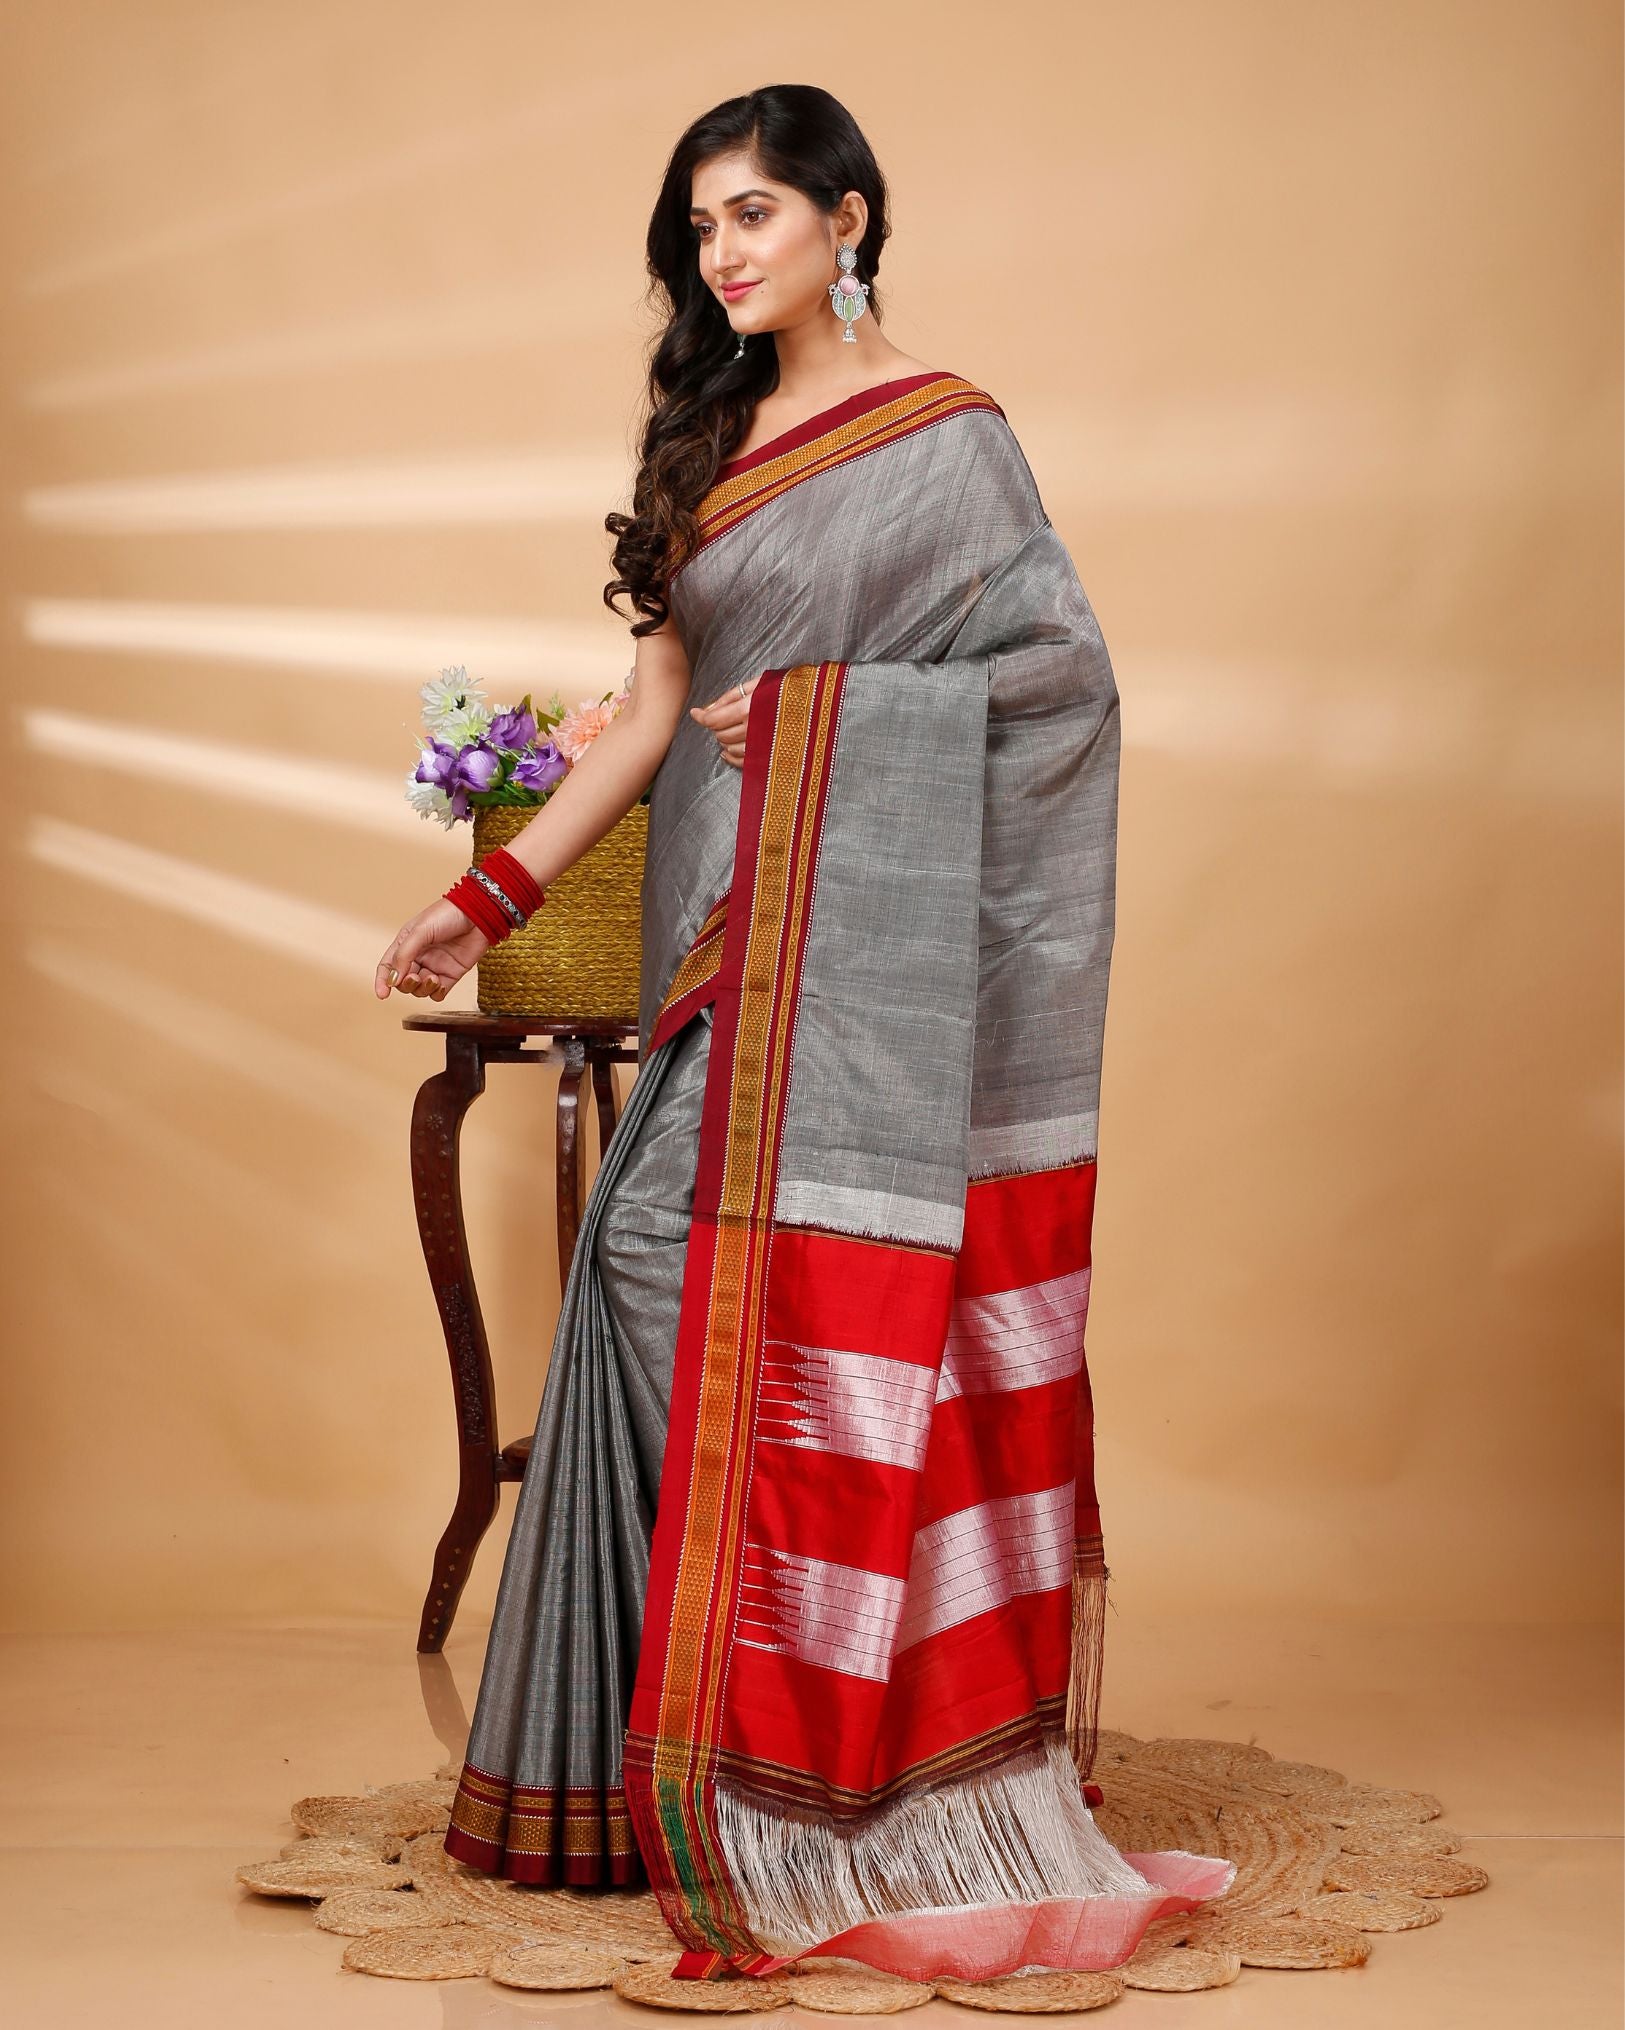 Shilpa Shetty Kundra's Wardrobe Is Full Of Inspiration For Saree Lovers |  VOGUE India | Vogue India